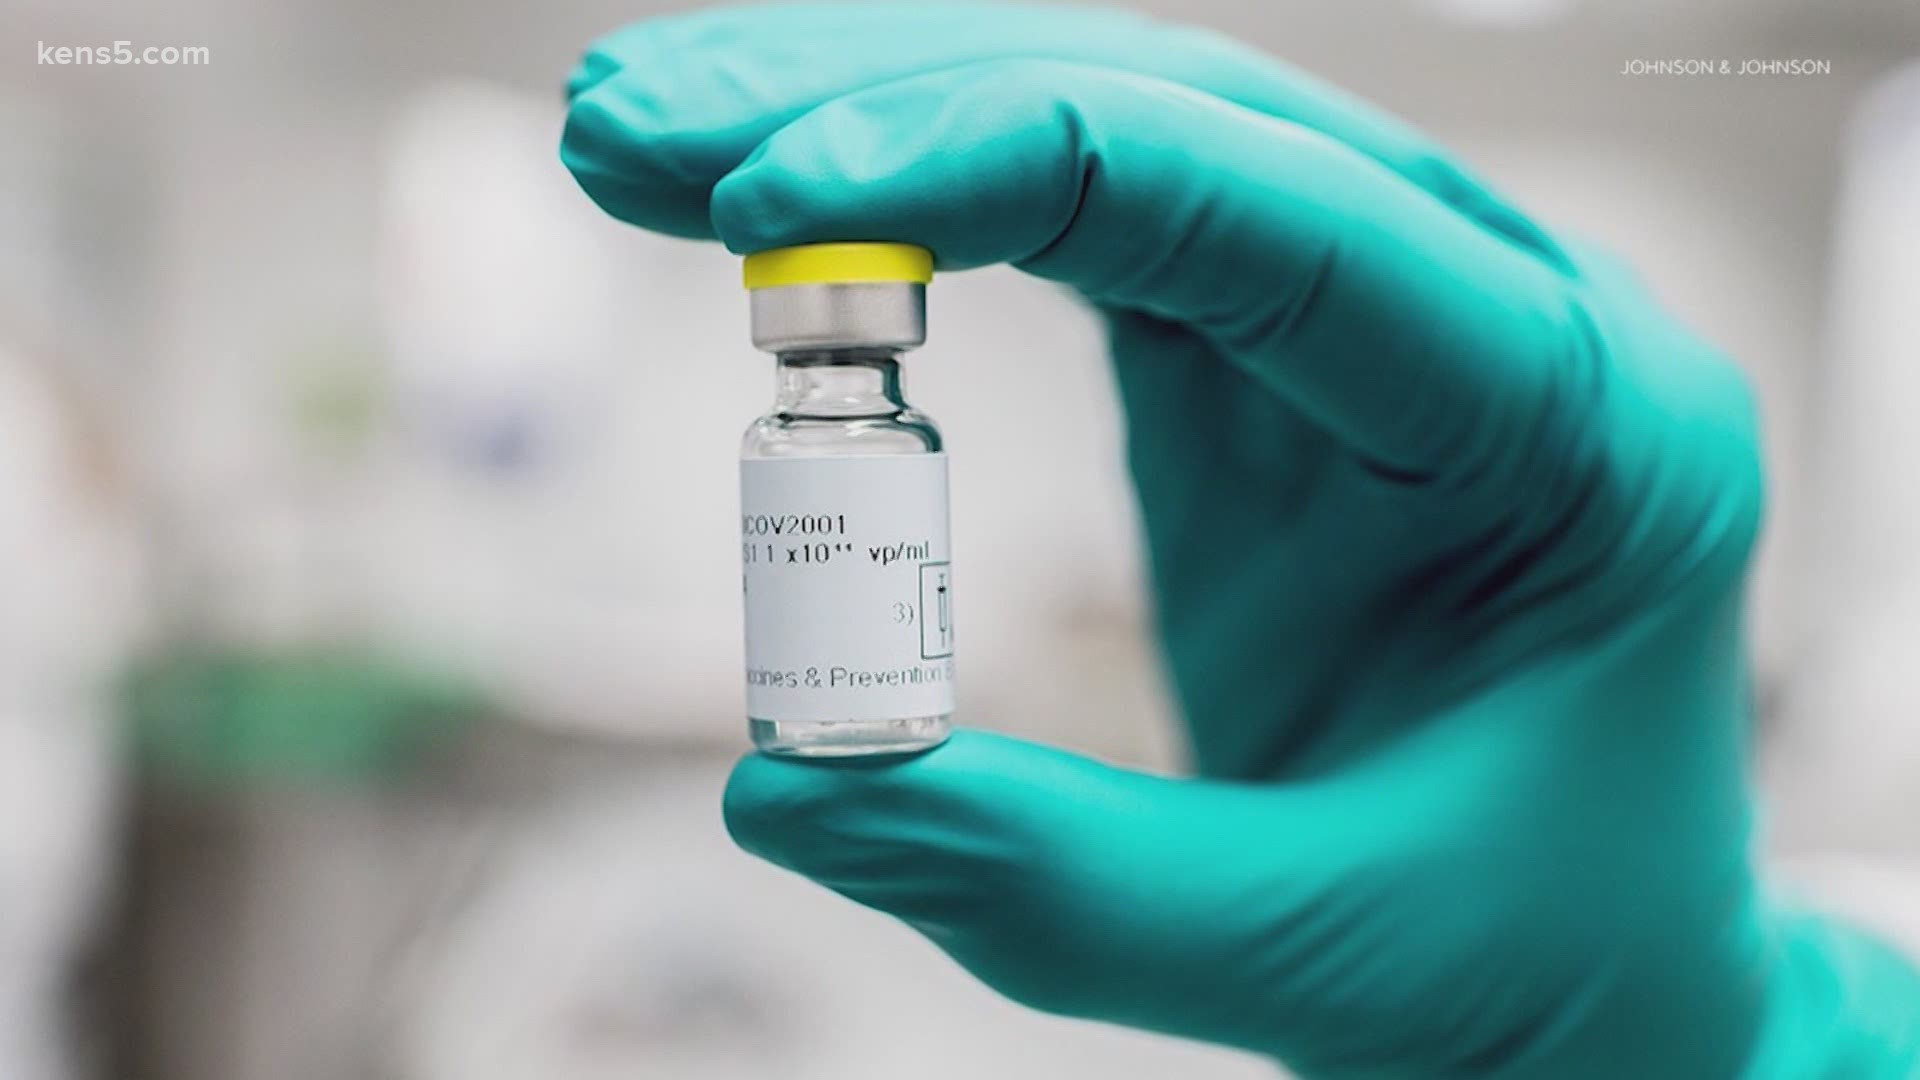 The FDA will consider approving Johnson & Johnson's coronavirus vaccine for emergency use.